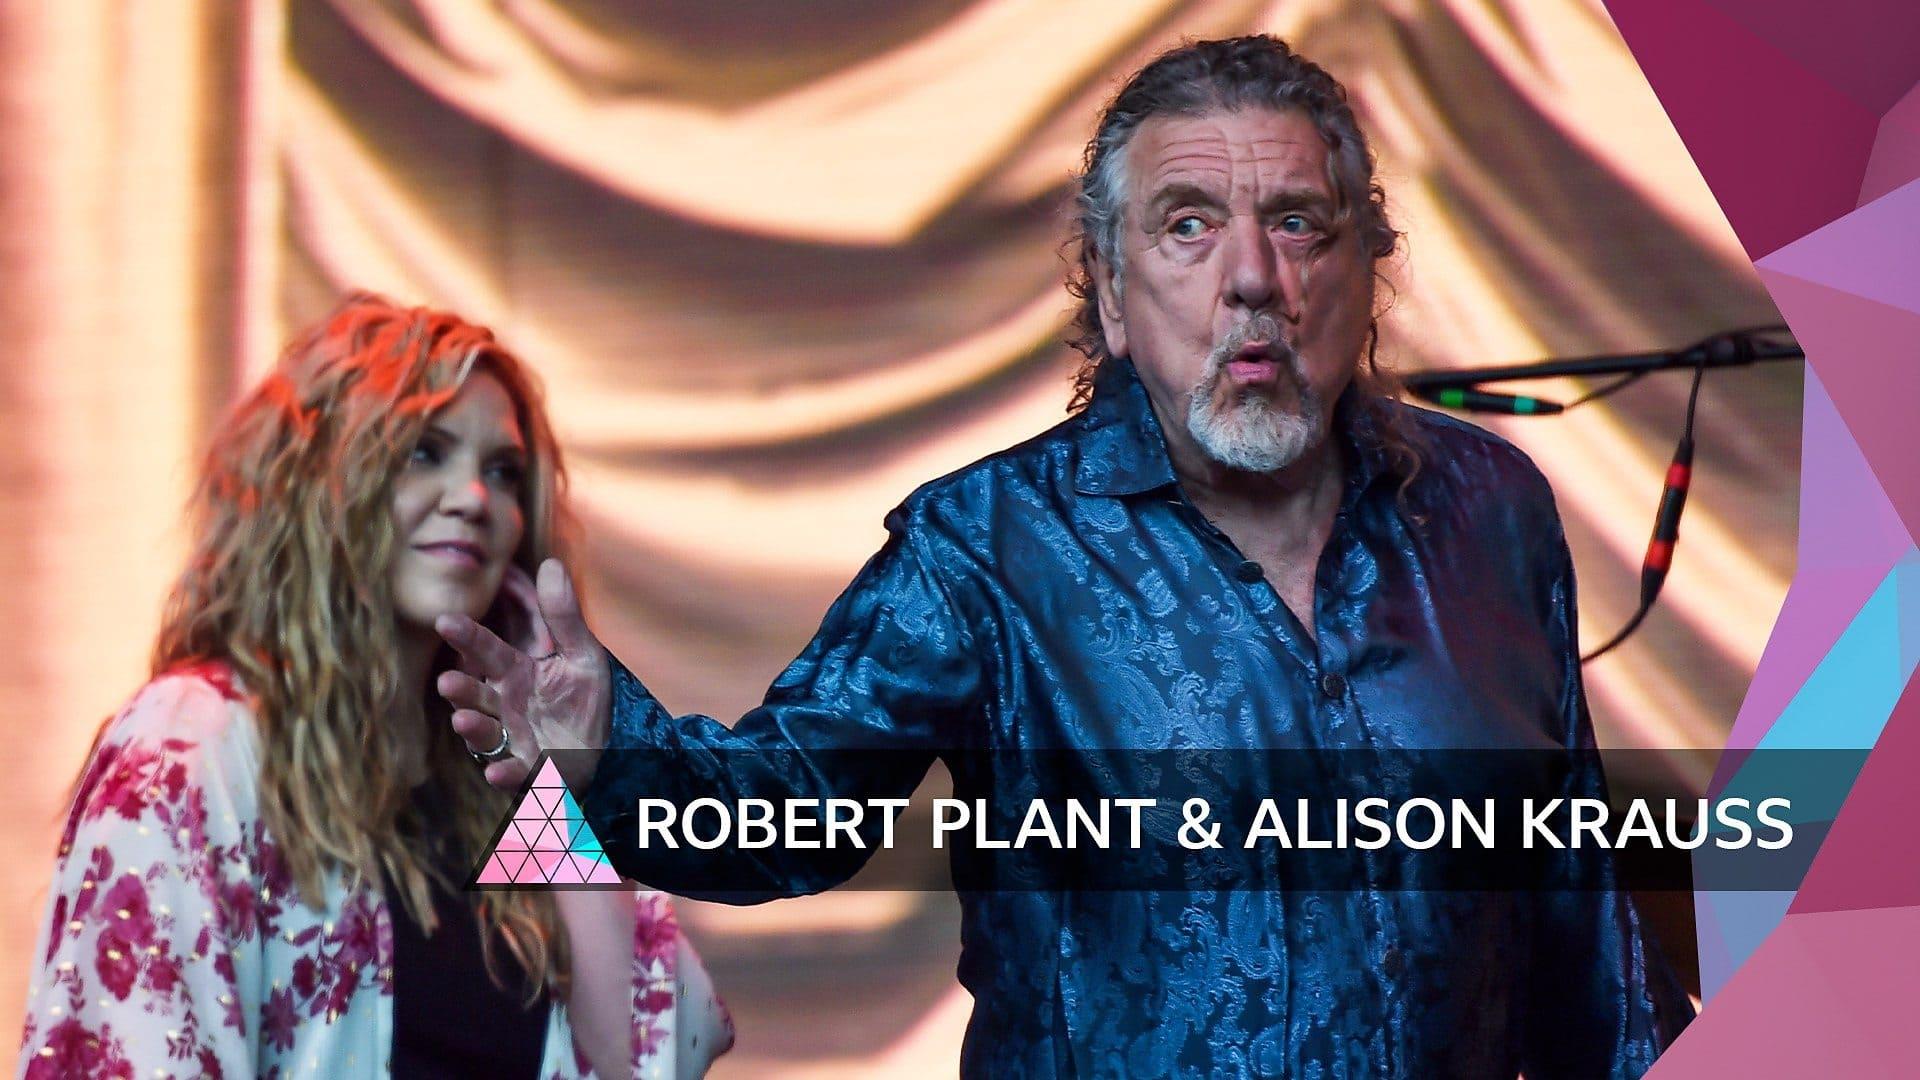 Robert Plant & Alison Krauss at Glastonbury backdrop